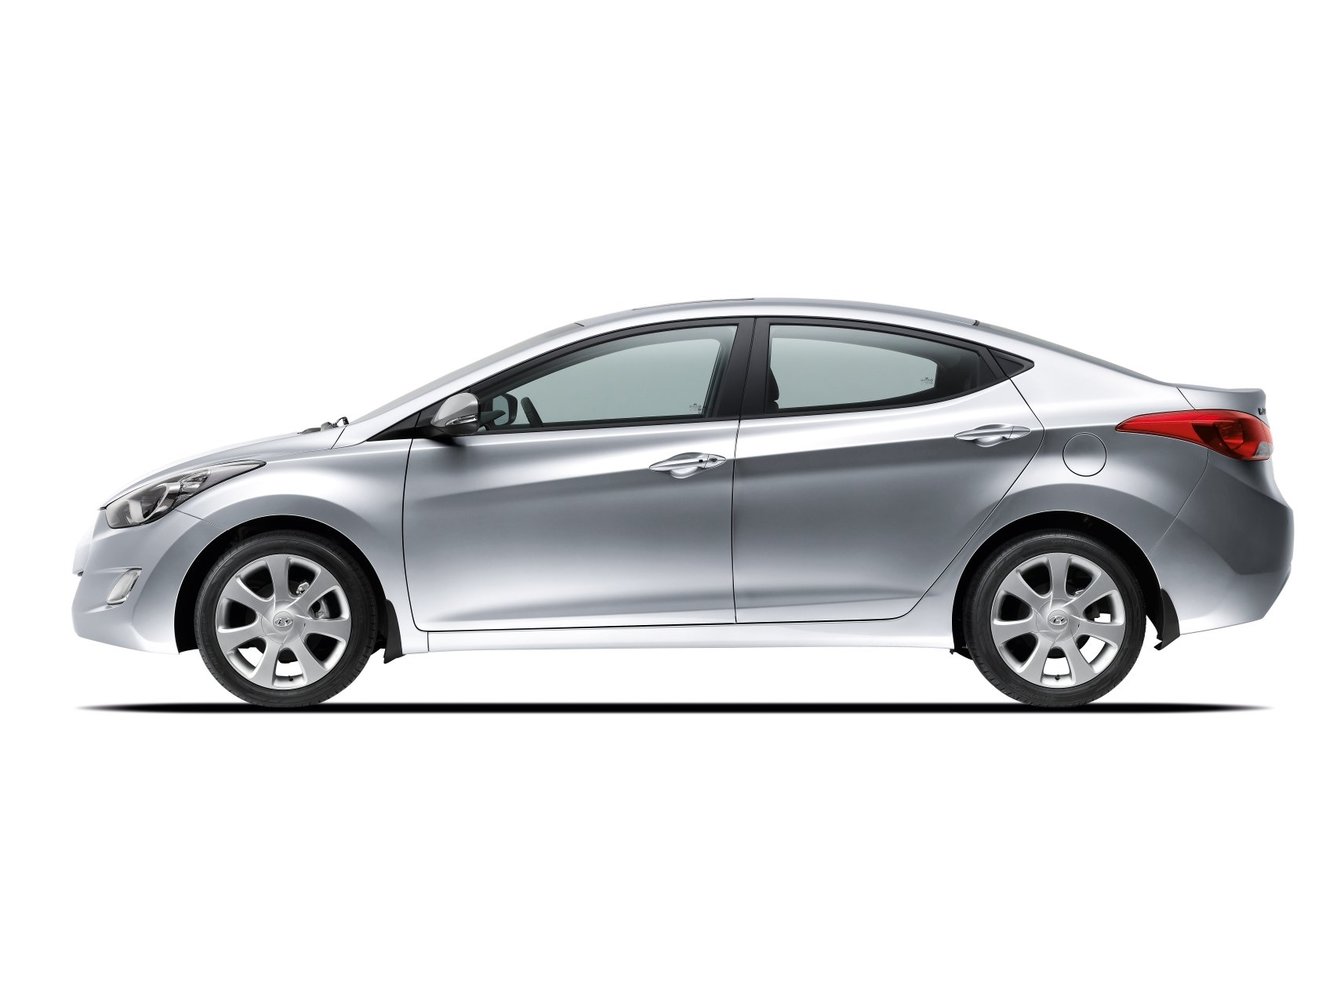 седан Hyundai Elantra 2011 - 2014г выпуска модификация Base 1.6 MT (132 л.с.)